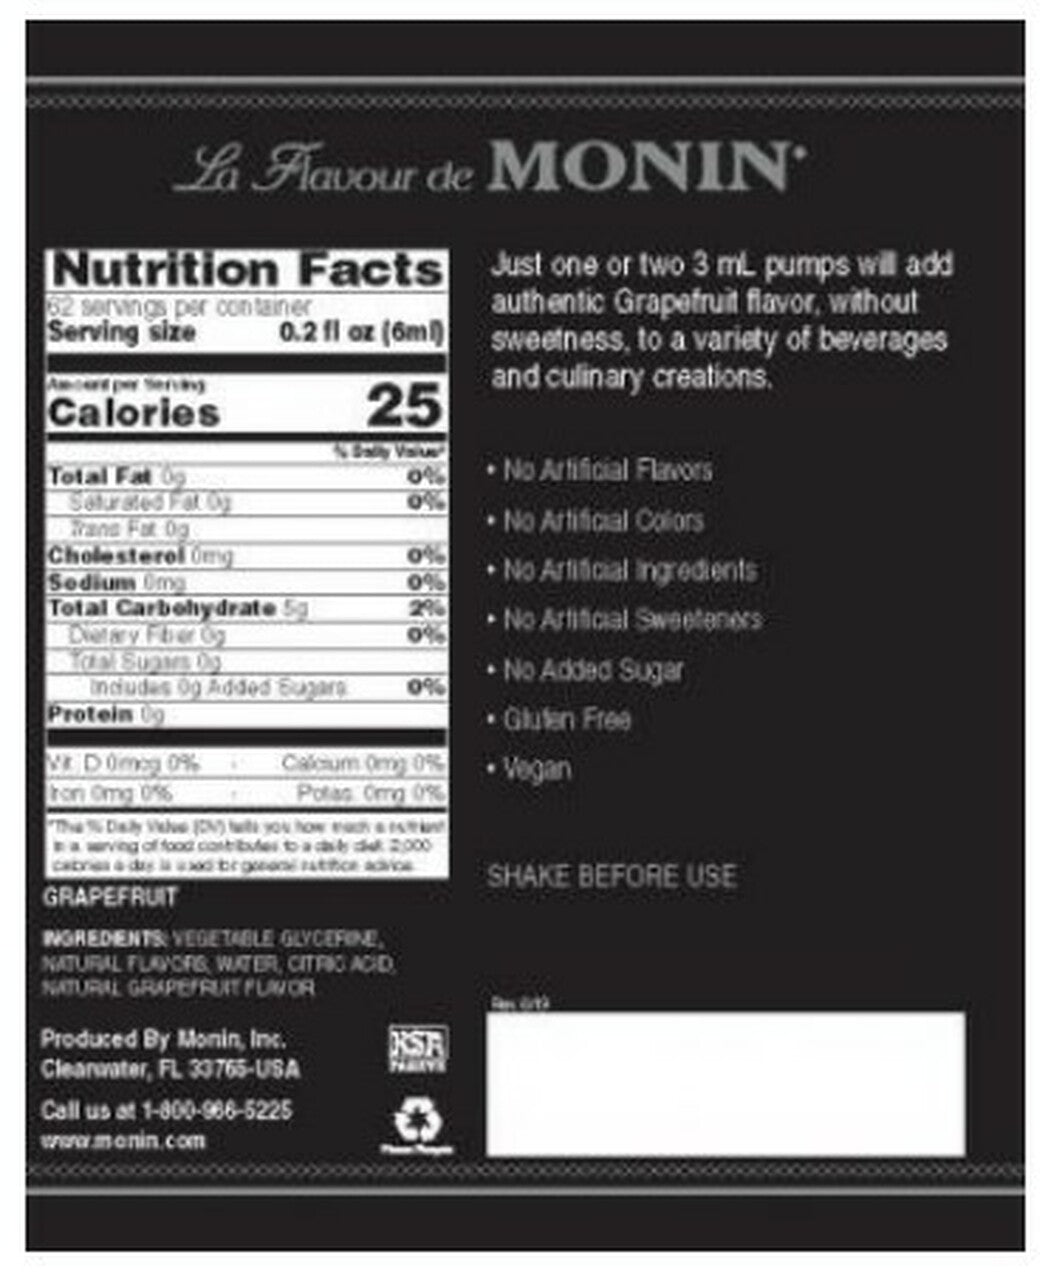 Monin Concentrated Flavor - 375 mL Plasic Bottle: Grapefruit